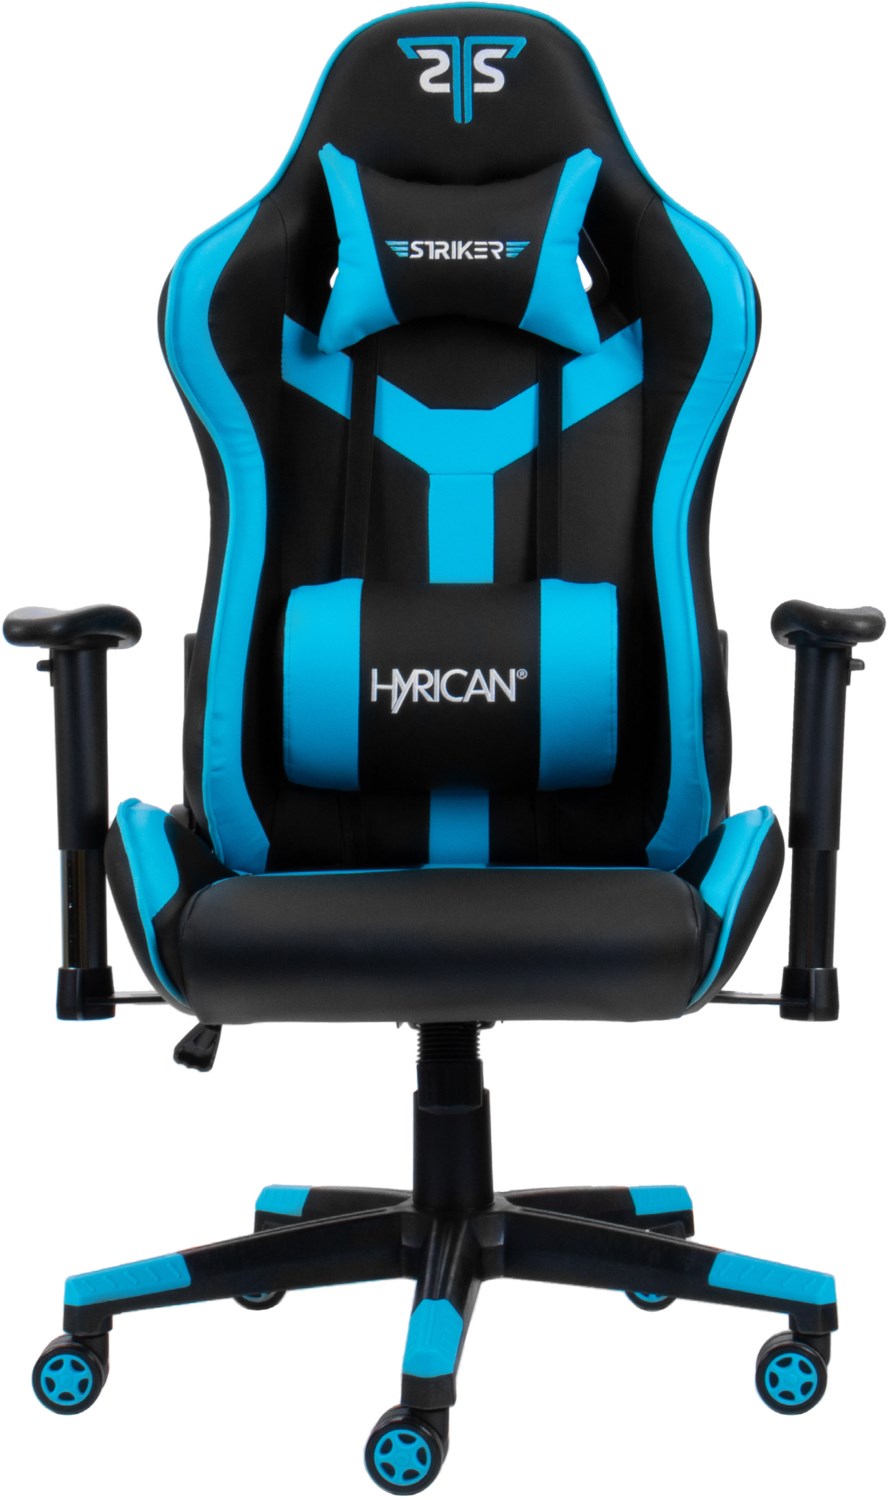 Hyrican Striker Gaming Chair | EURONICS | Stühle